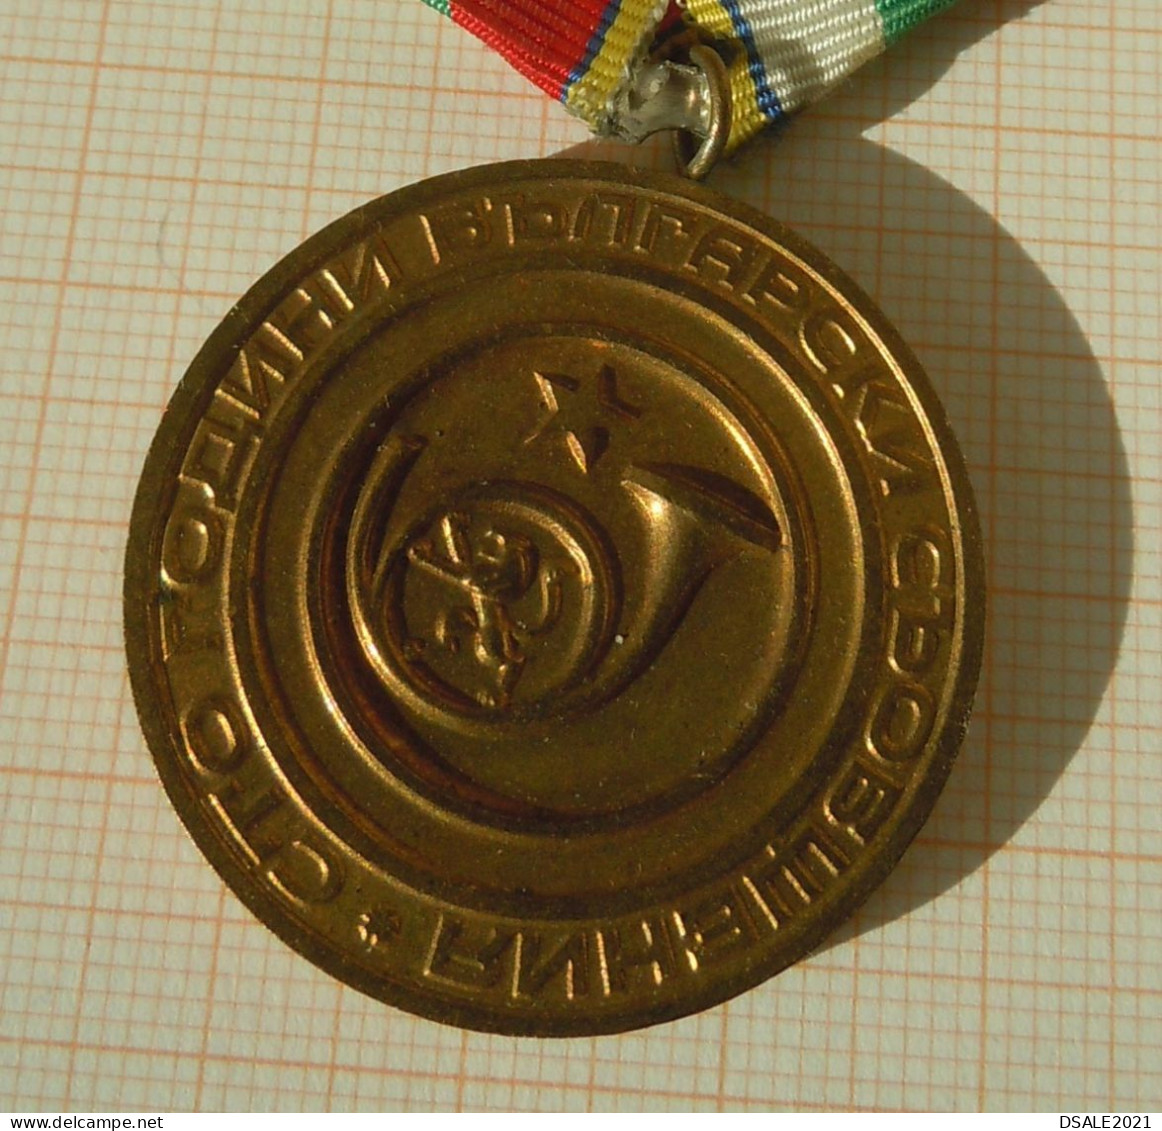 Bulgaria Bulgarie Bulgarien Bulgarian Medal 1879-1979 Hundred Years Anniversary of Bulgarian Posts, Medal, Order /ds1155